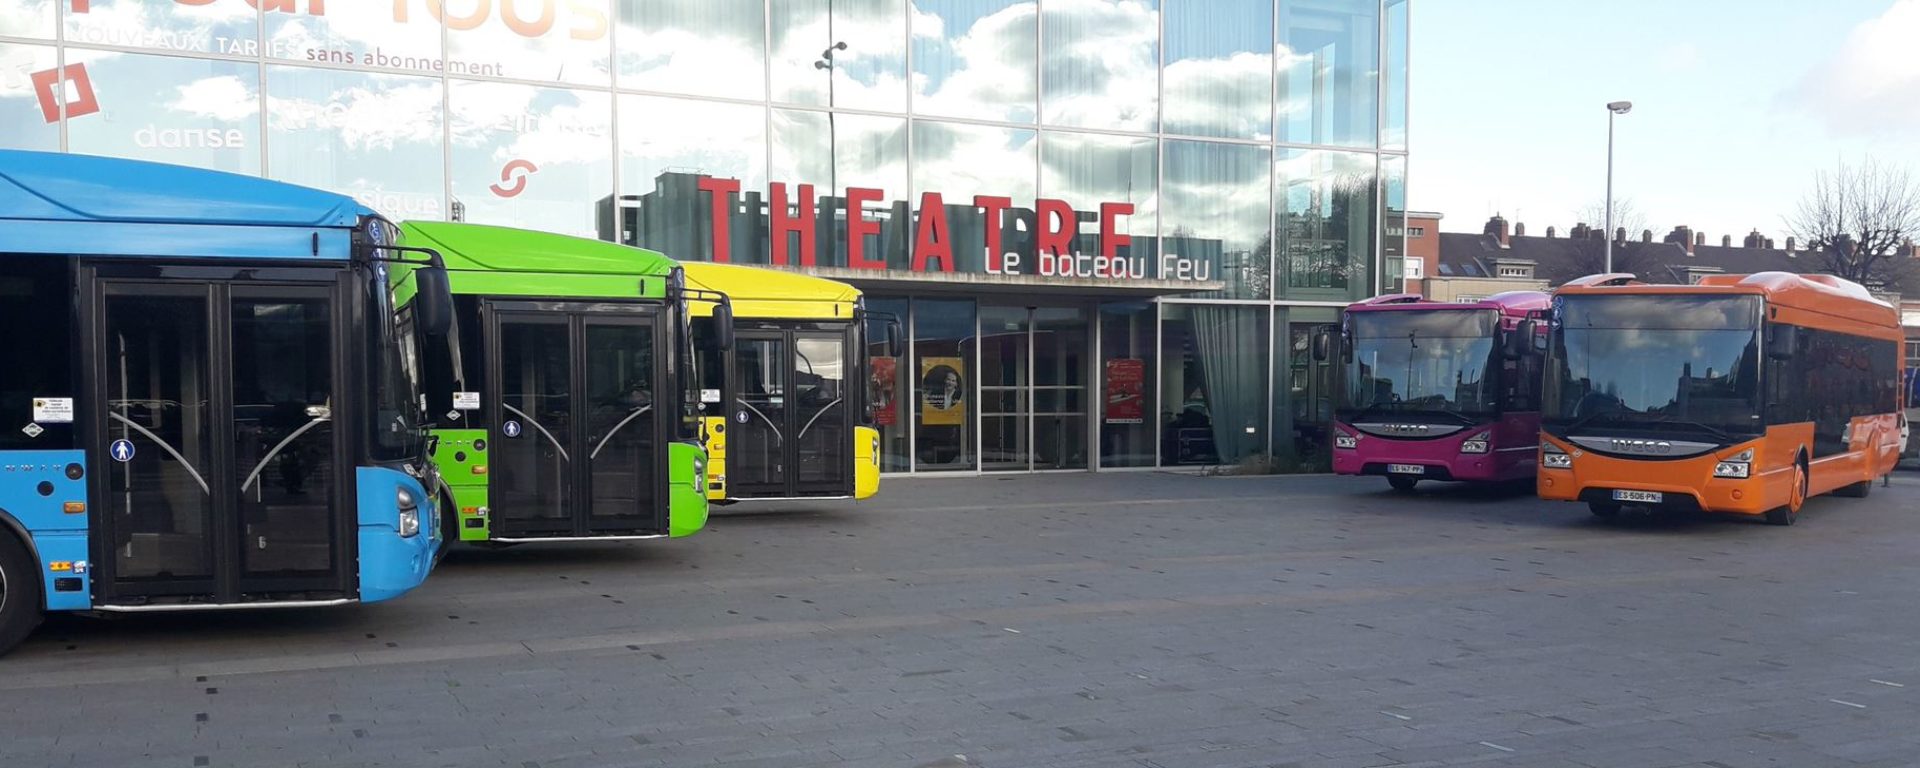 Bus_transport-urbain-Dunkerque_DK'BUS_STDE_Transdev-Haut-de-France